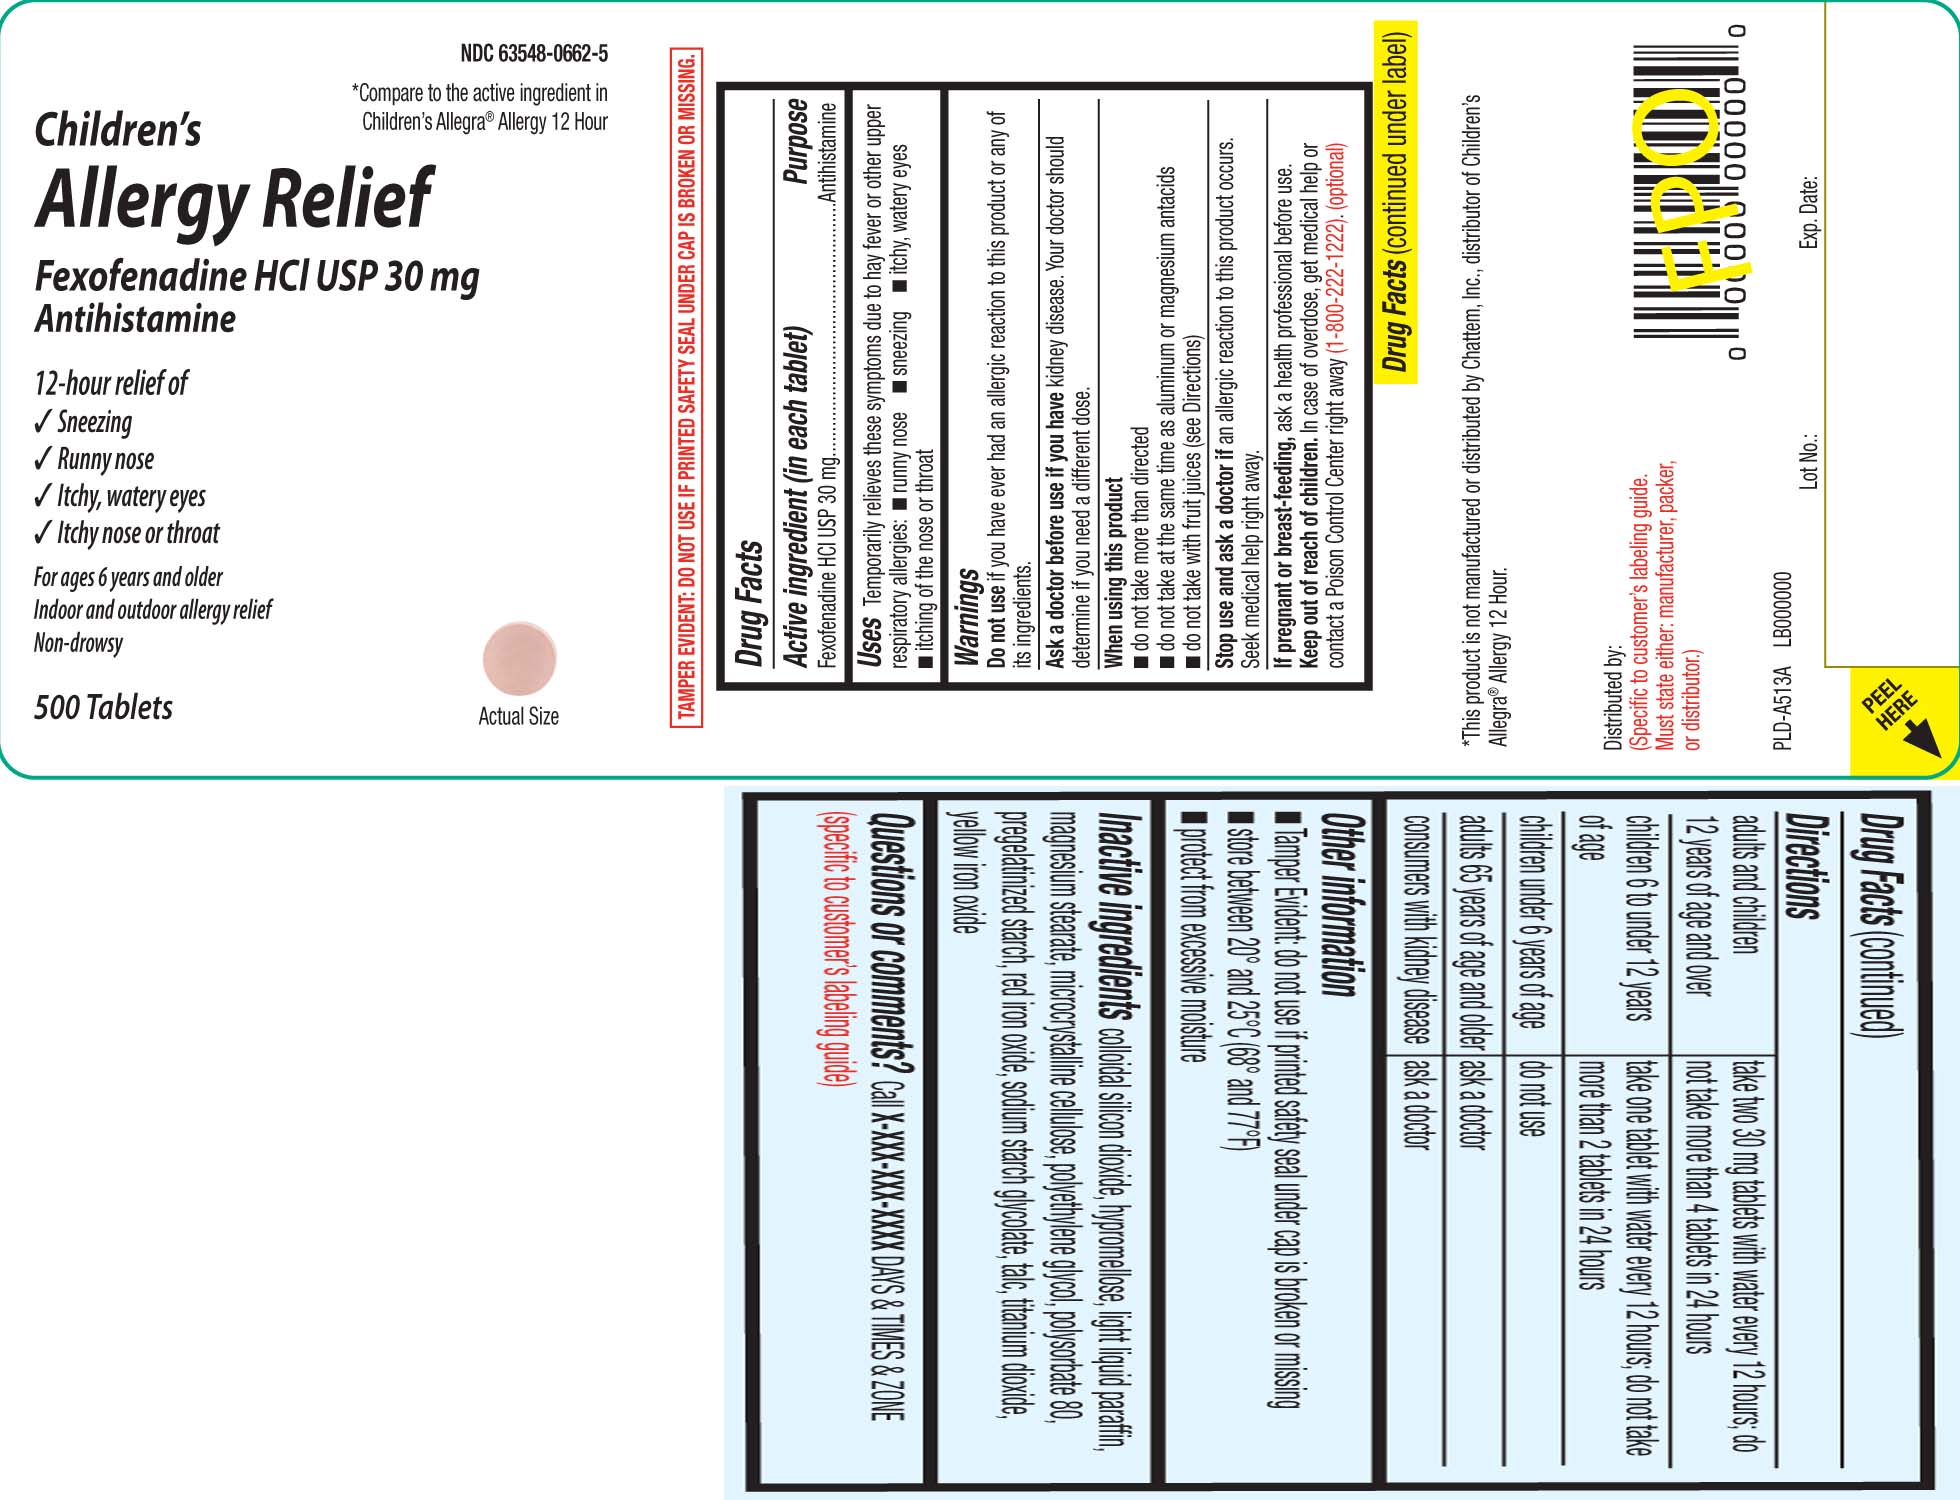 Fexofenadine HCL USP 30 mg